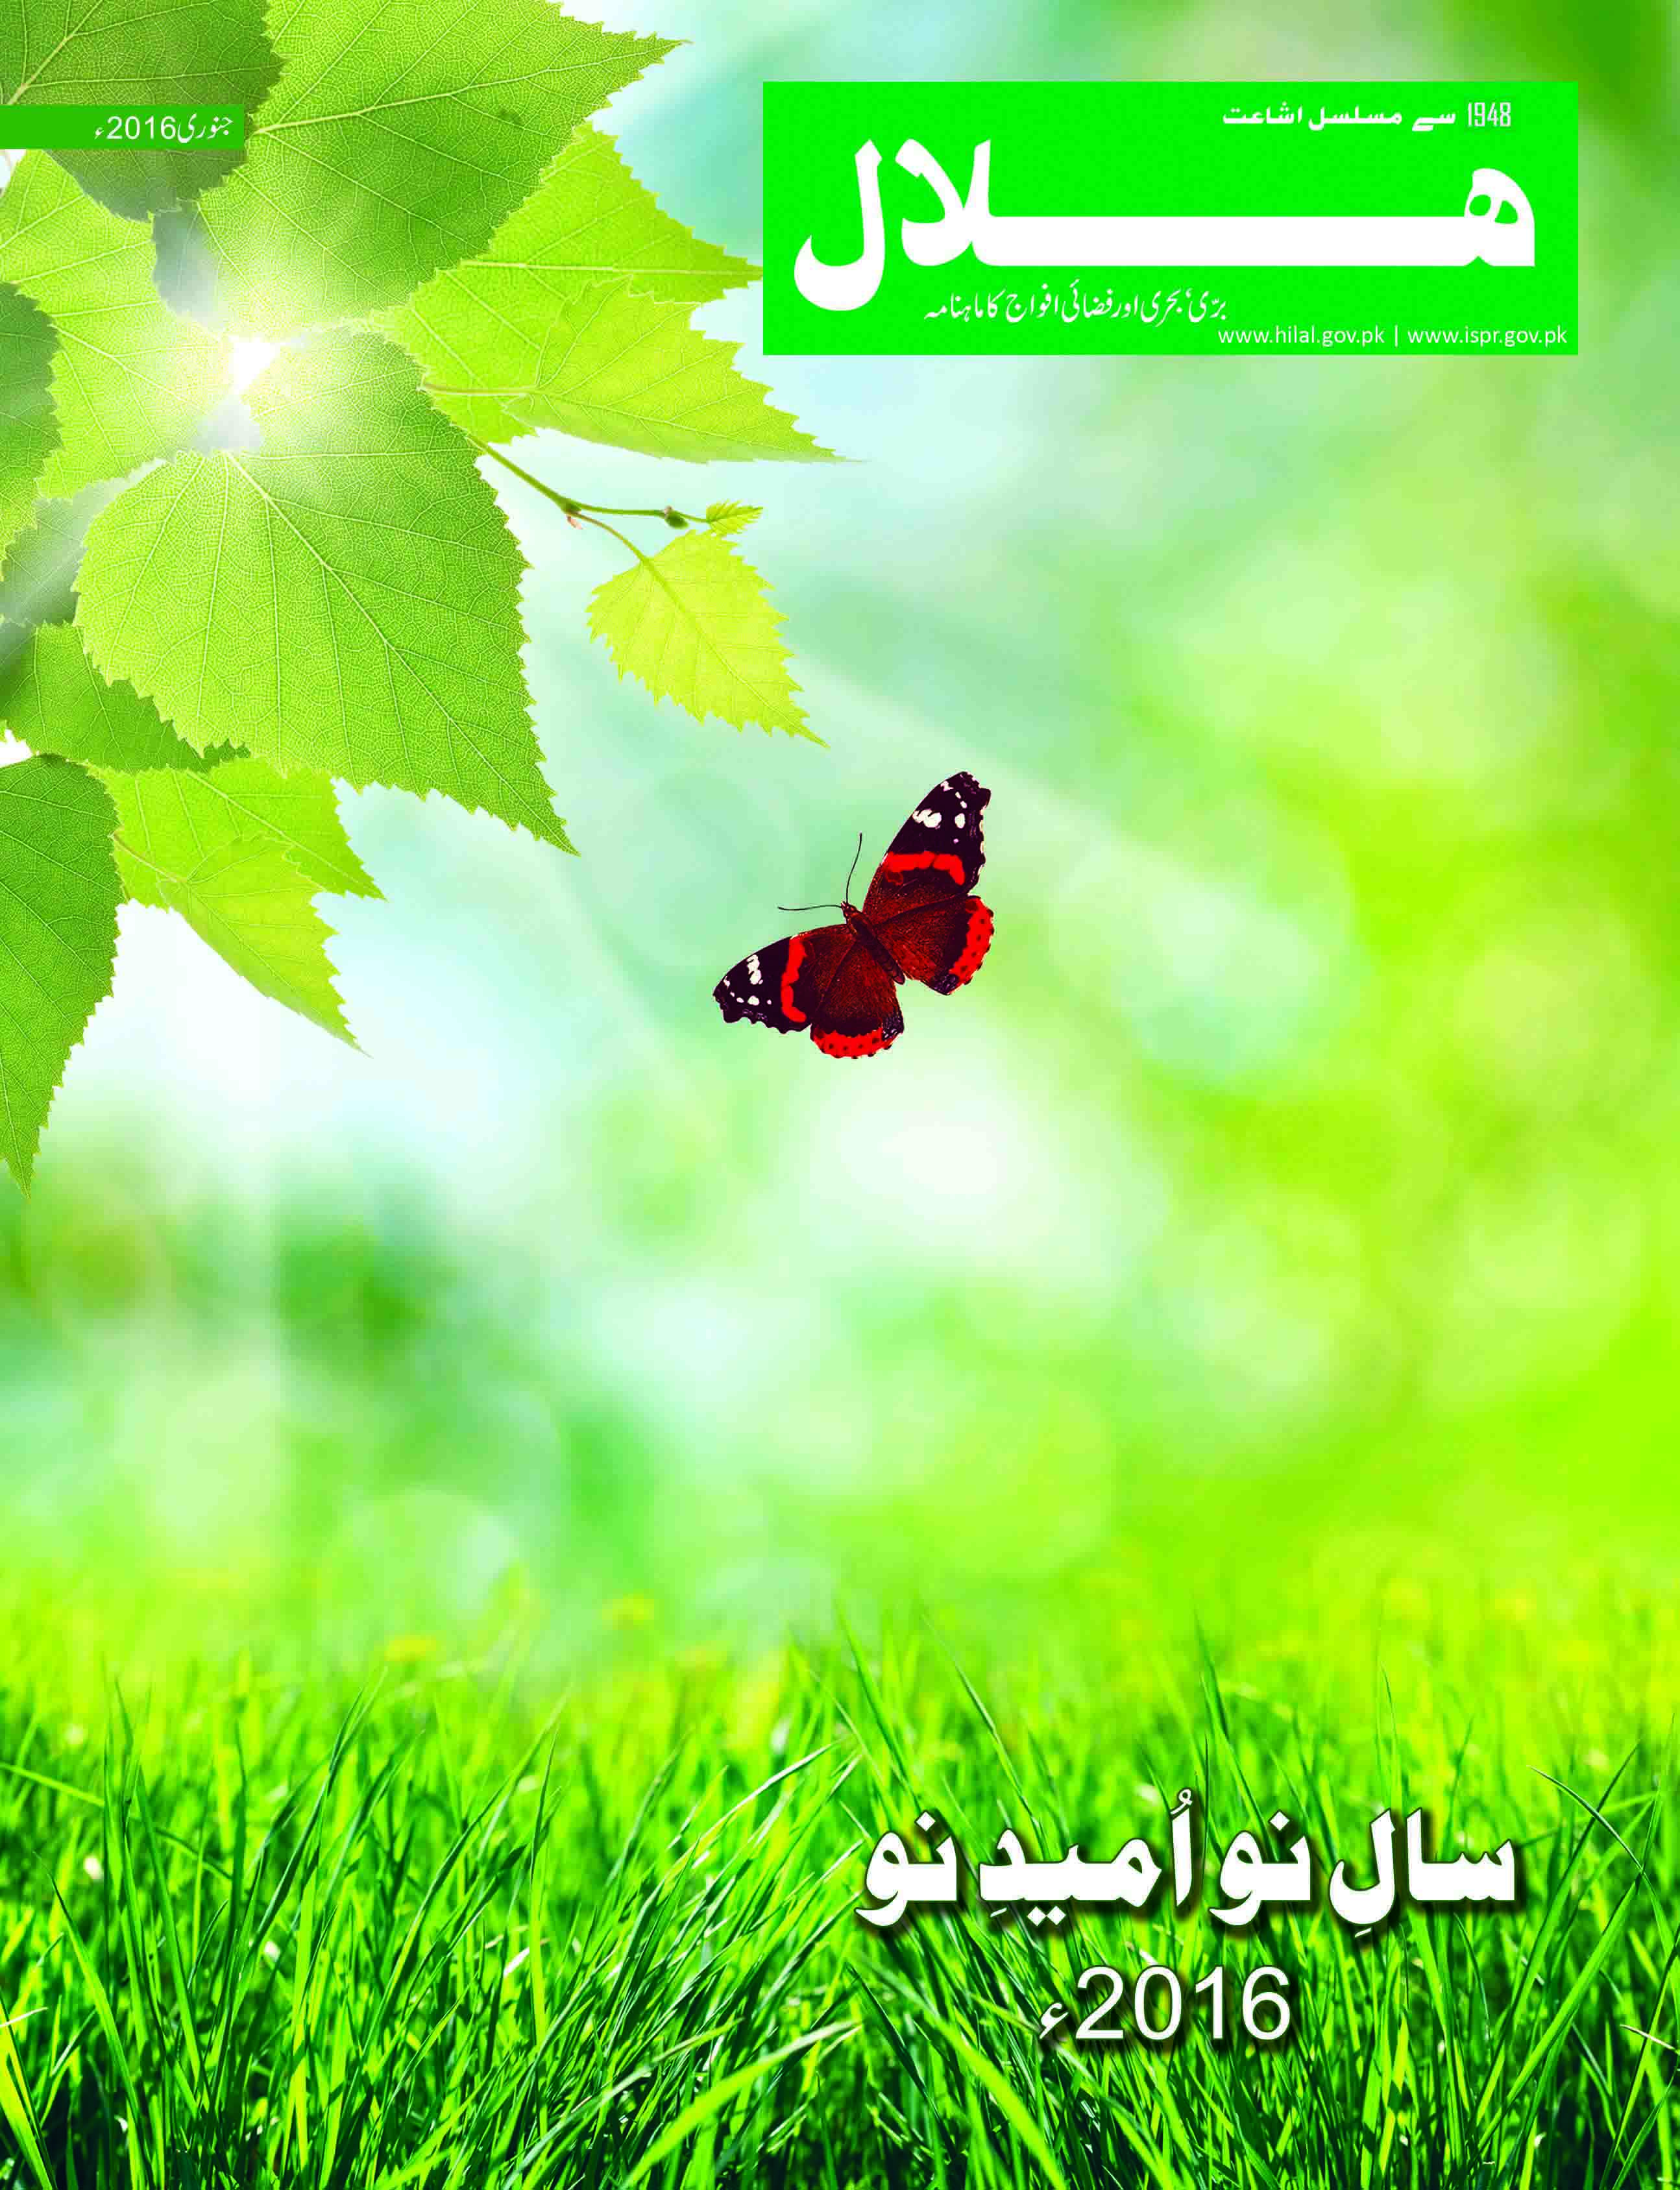 Hilal Urdu January 2016